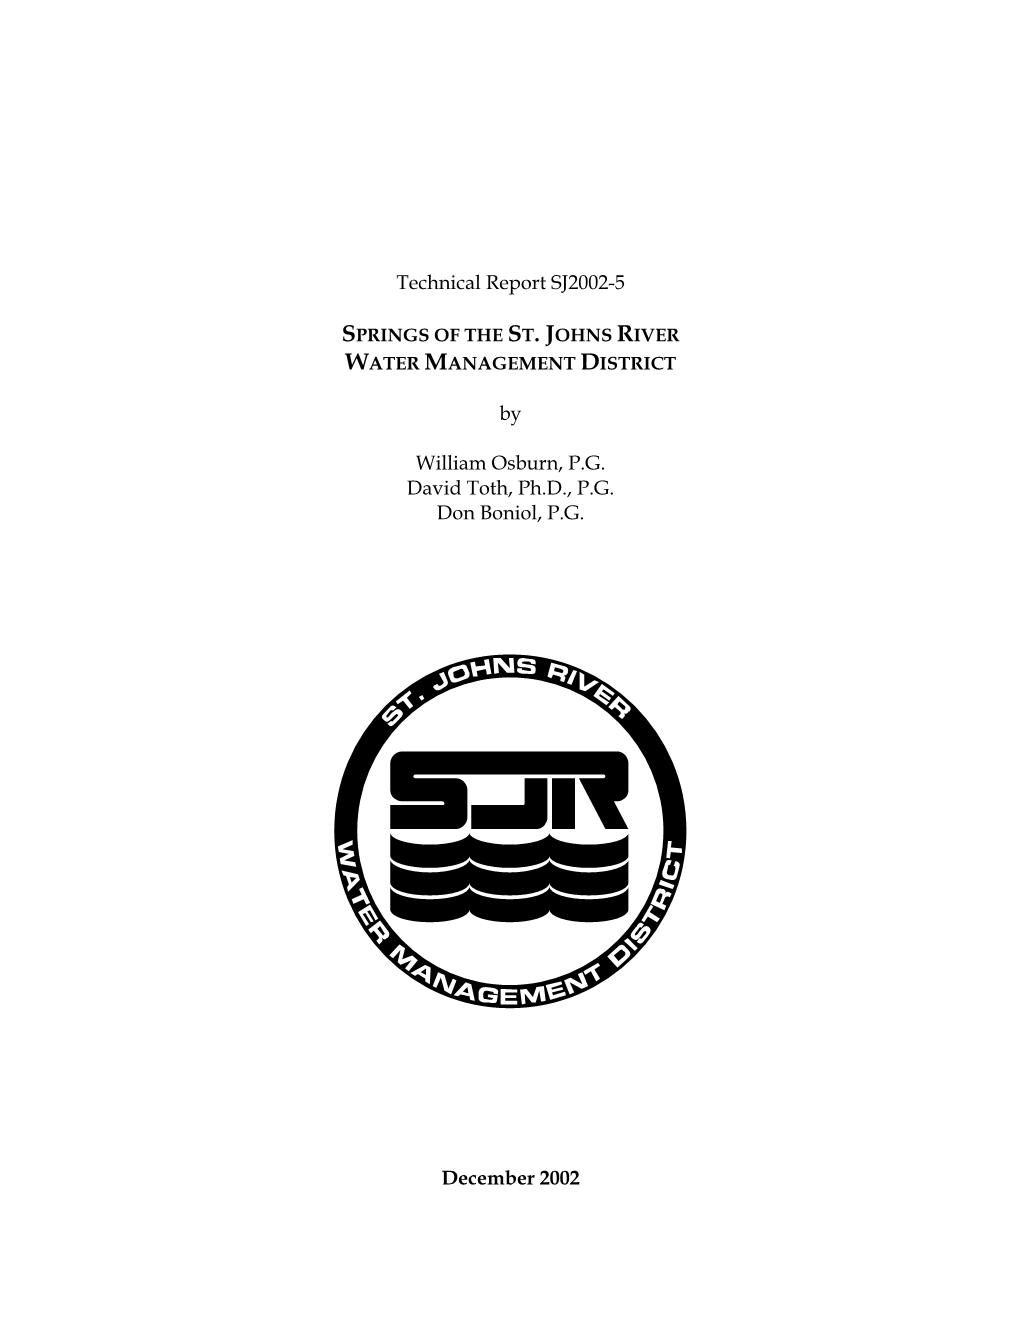 Technical Report SJ2002-5 by William Osburn, P.G. David Toth, Ph.D., P.G. Don Boniol, P.G. December 2002